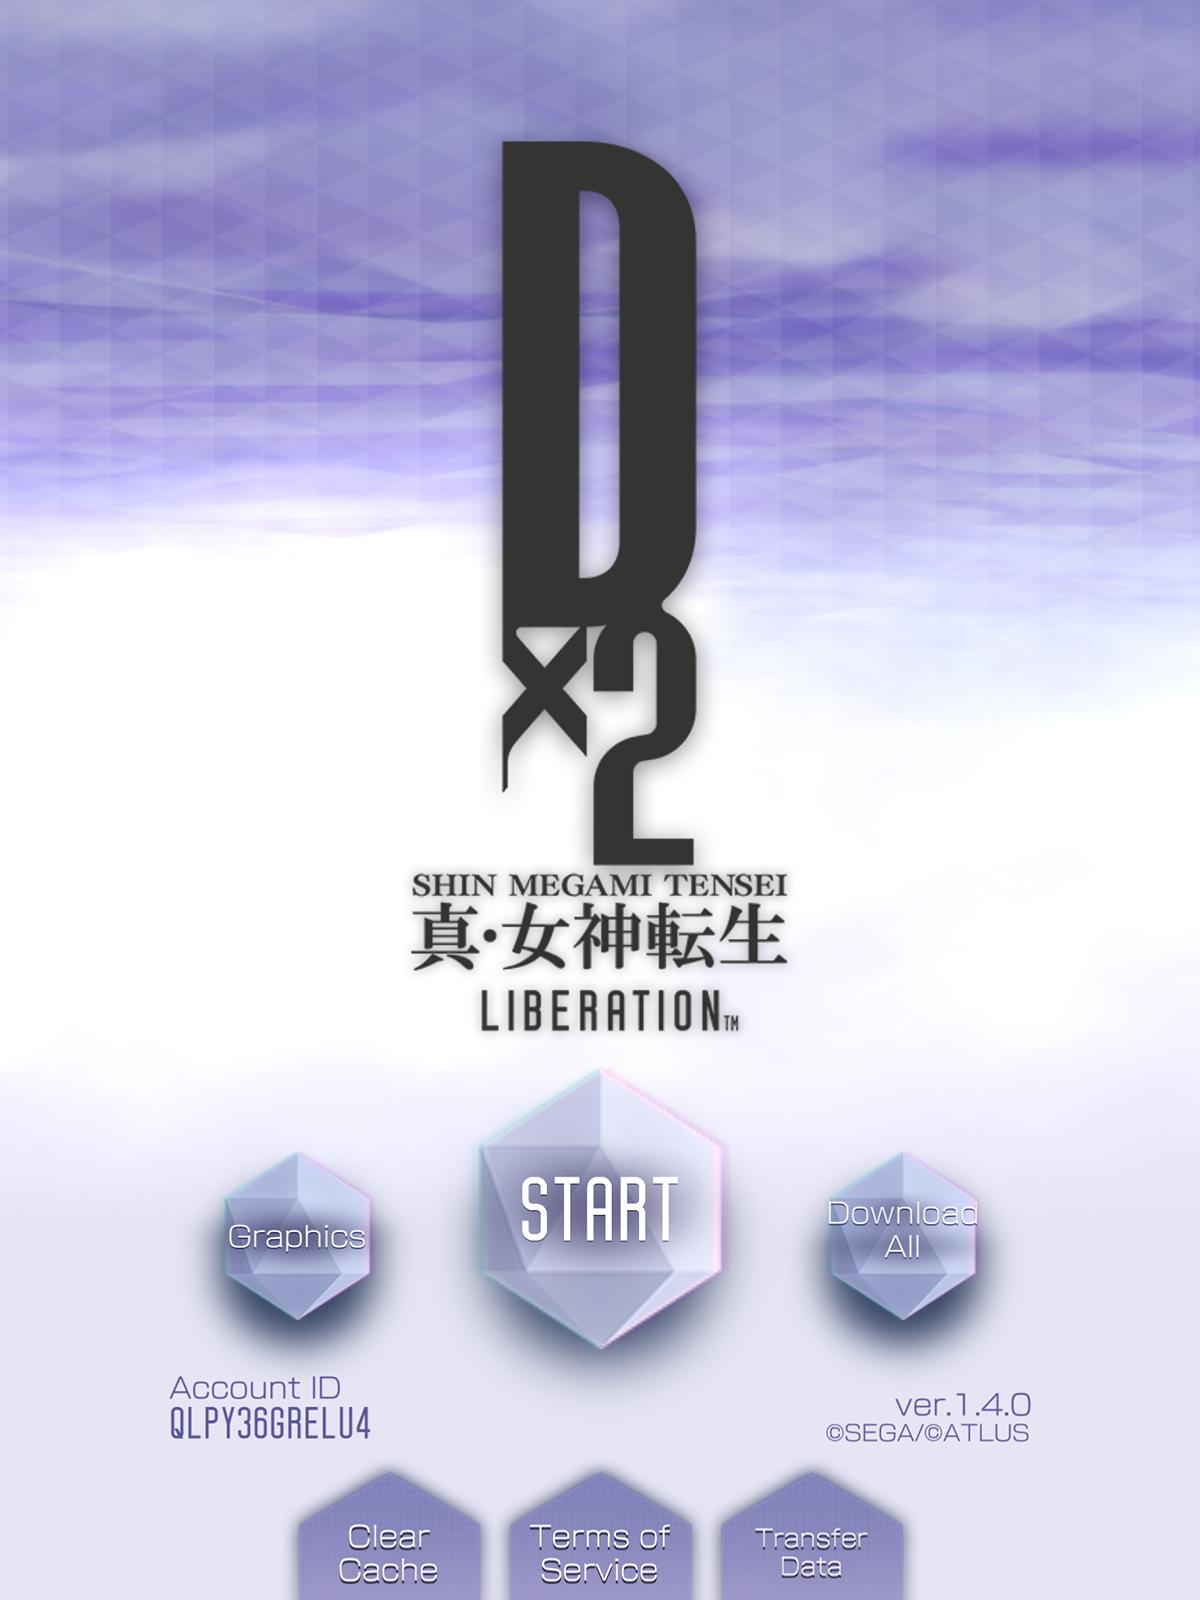 Shin Megami Tensei Liberation Dx2 review - Battle demons, anywhere you go